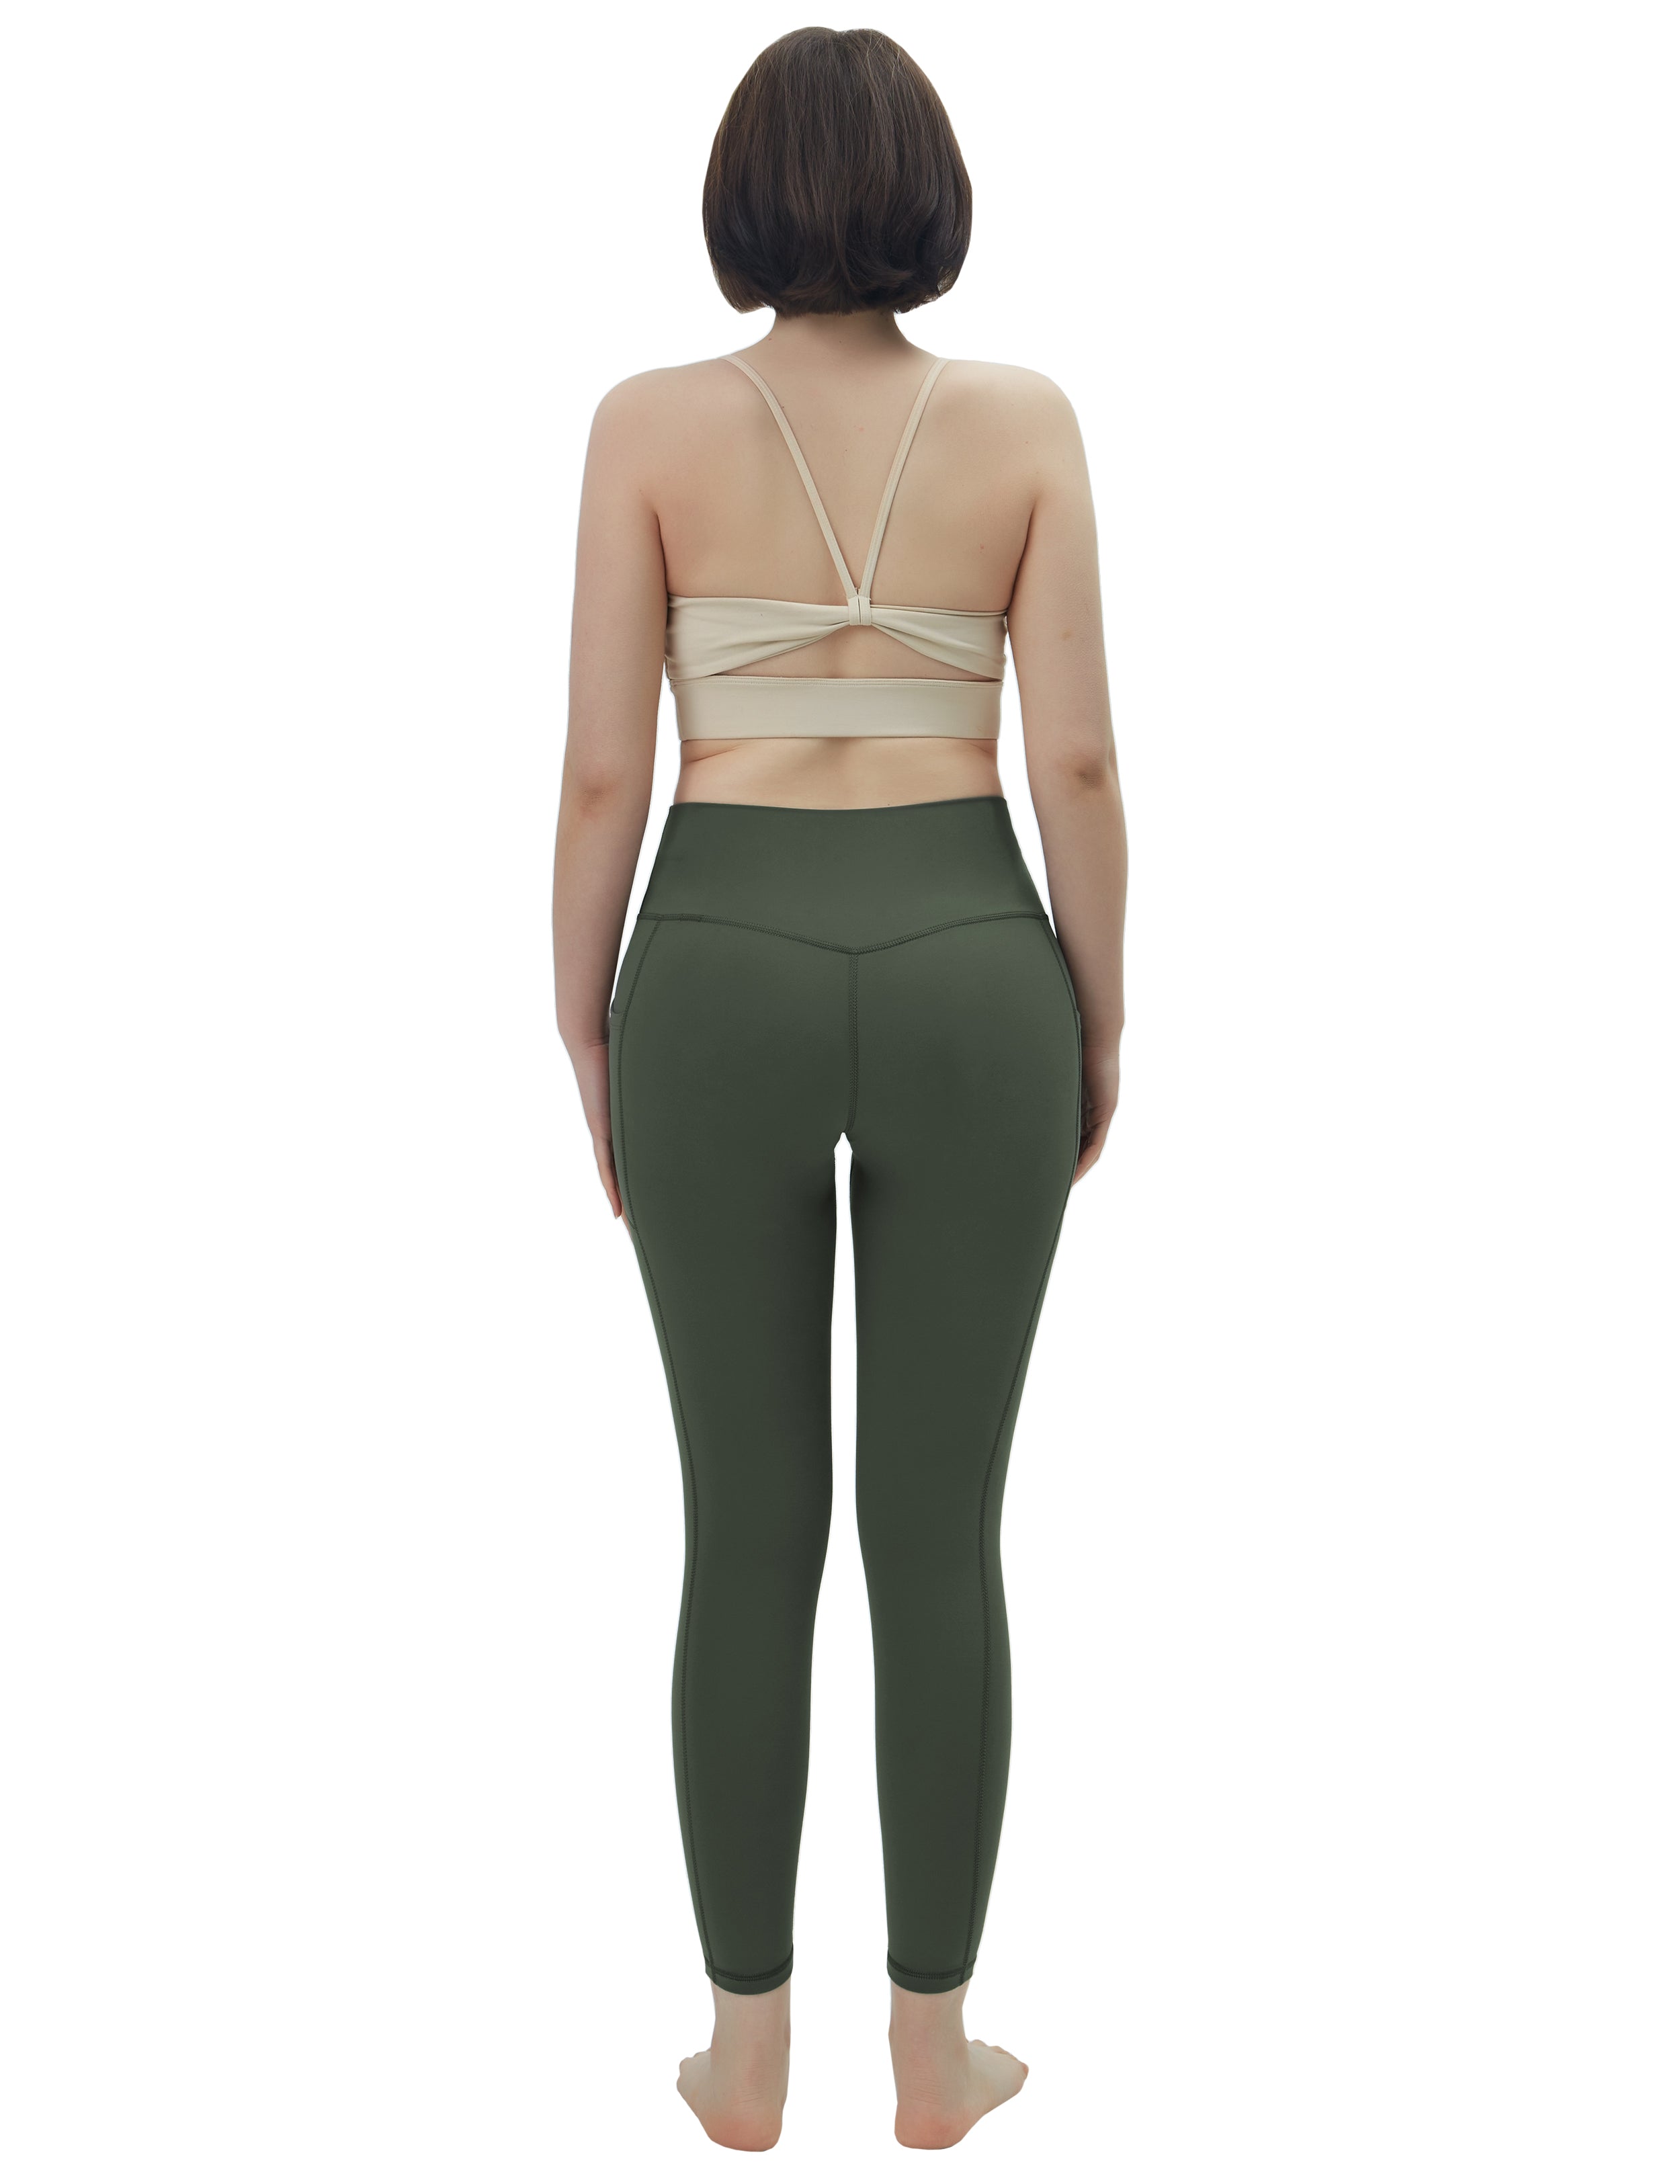 High Waisted Yoga Pants 7/8 Length Leggings with Pockets olivegreen_yoga